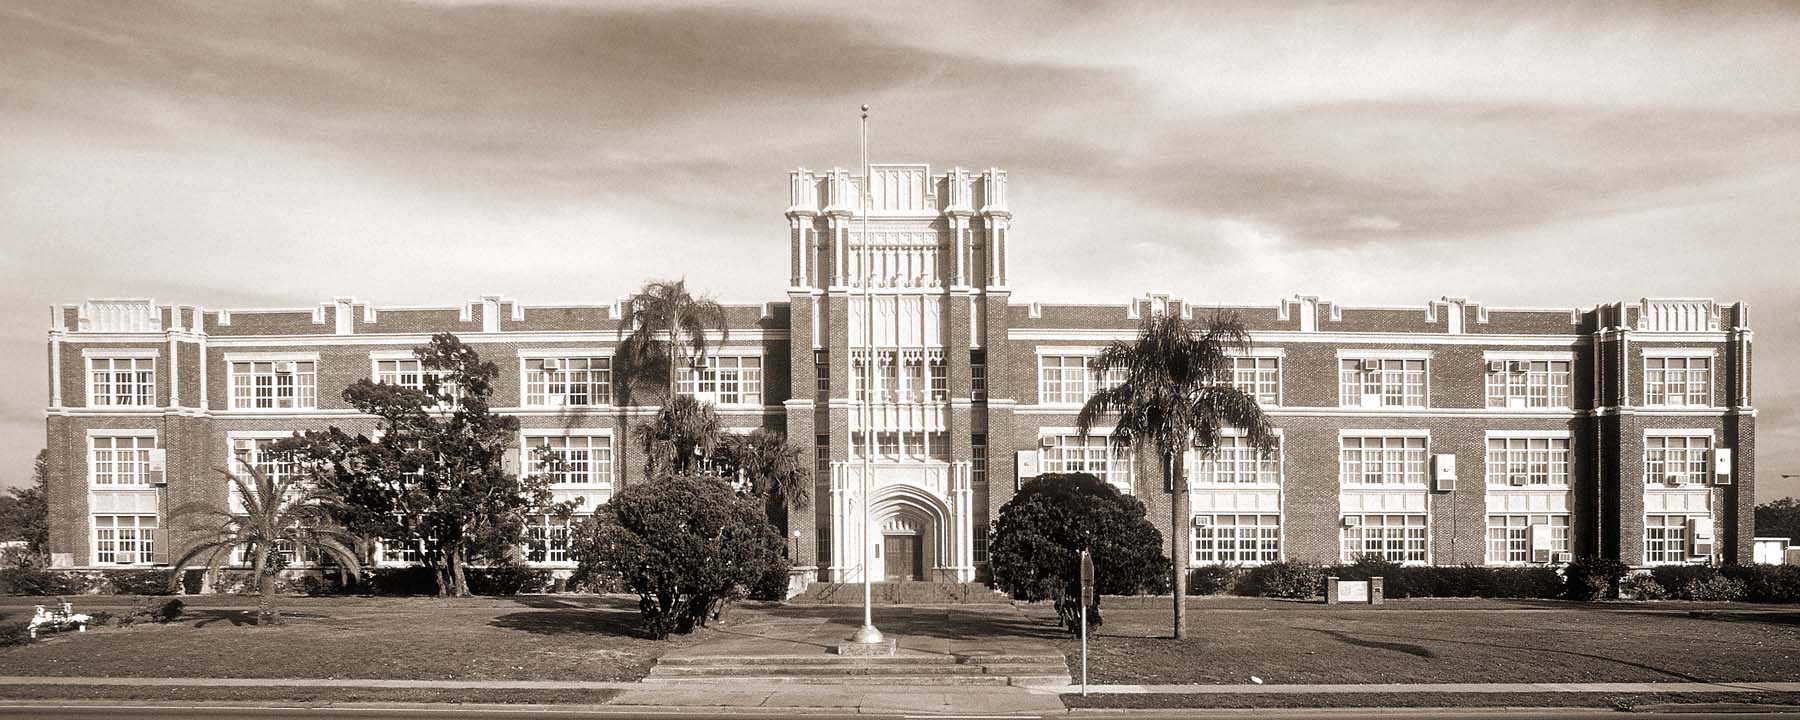 Historic Sarasota High School, future home of the Sarasota Museum of Art (Photo by Dick Dickinson)